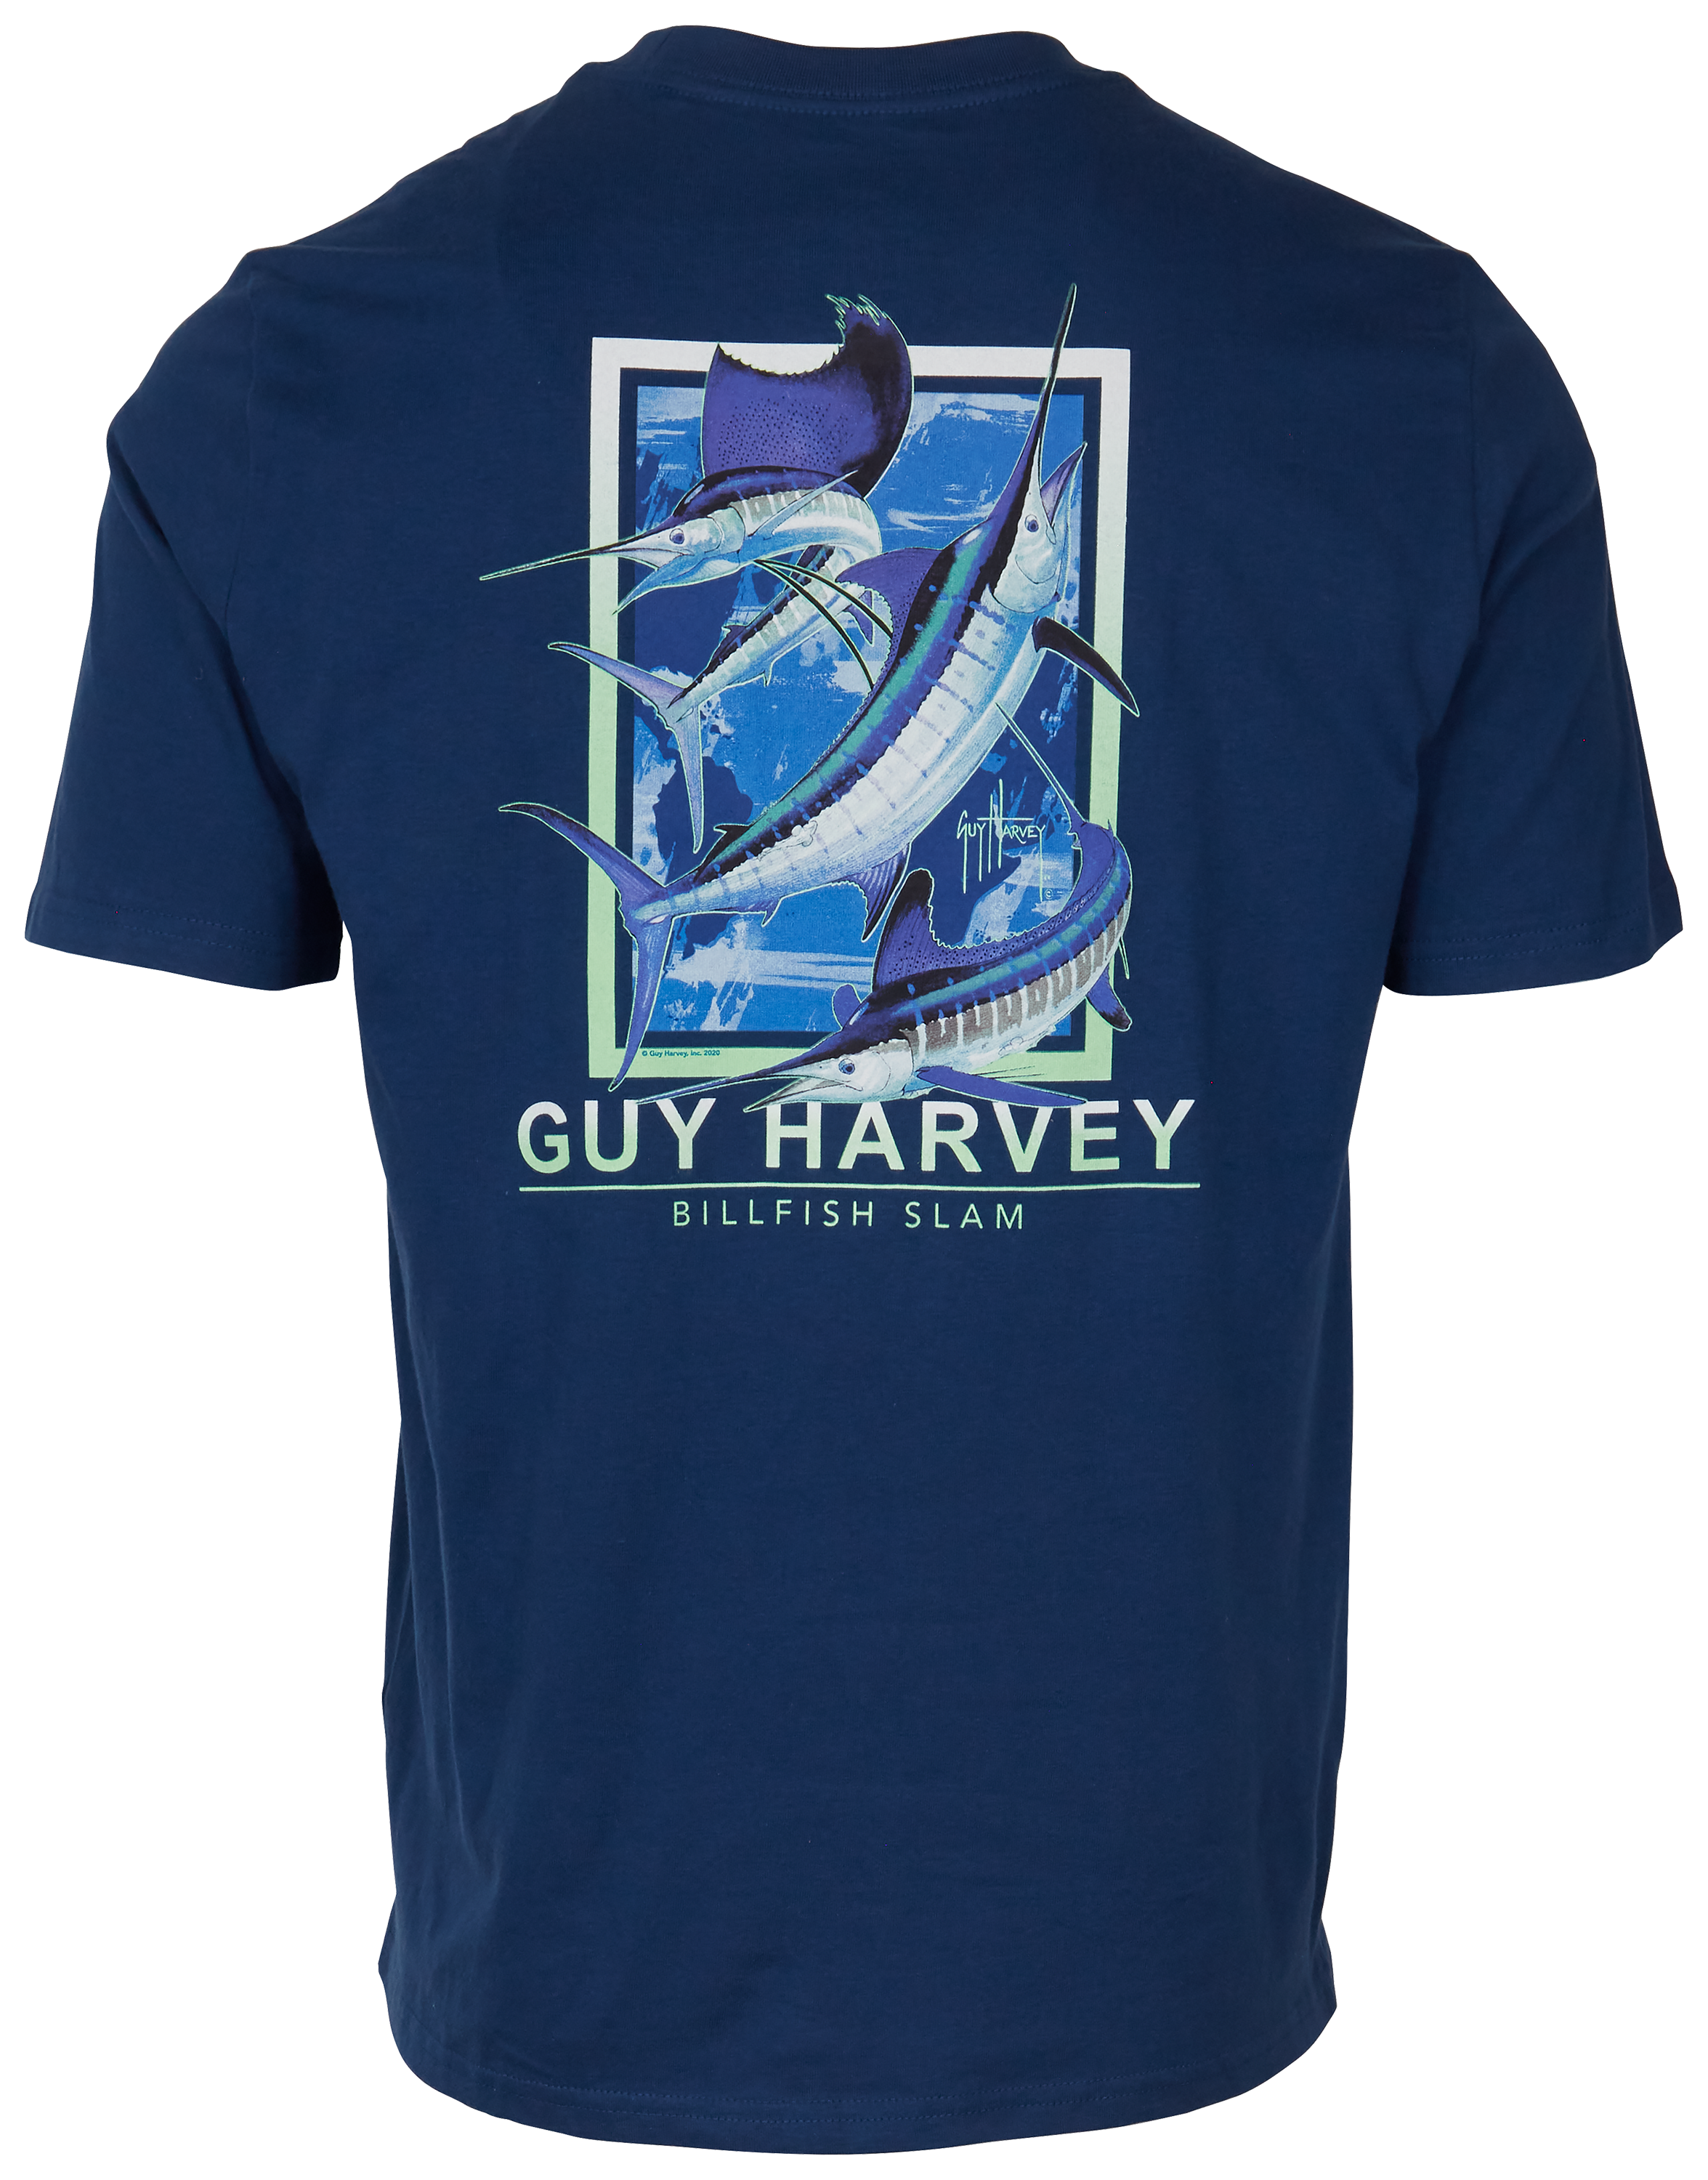 Guy Harvey Billfish Slam Short-Sleeve Pocket T-Shirt for Men